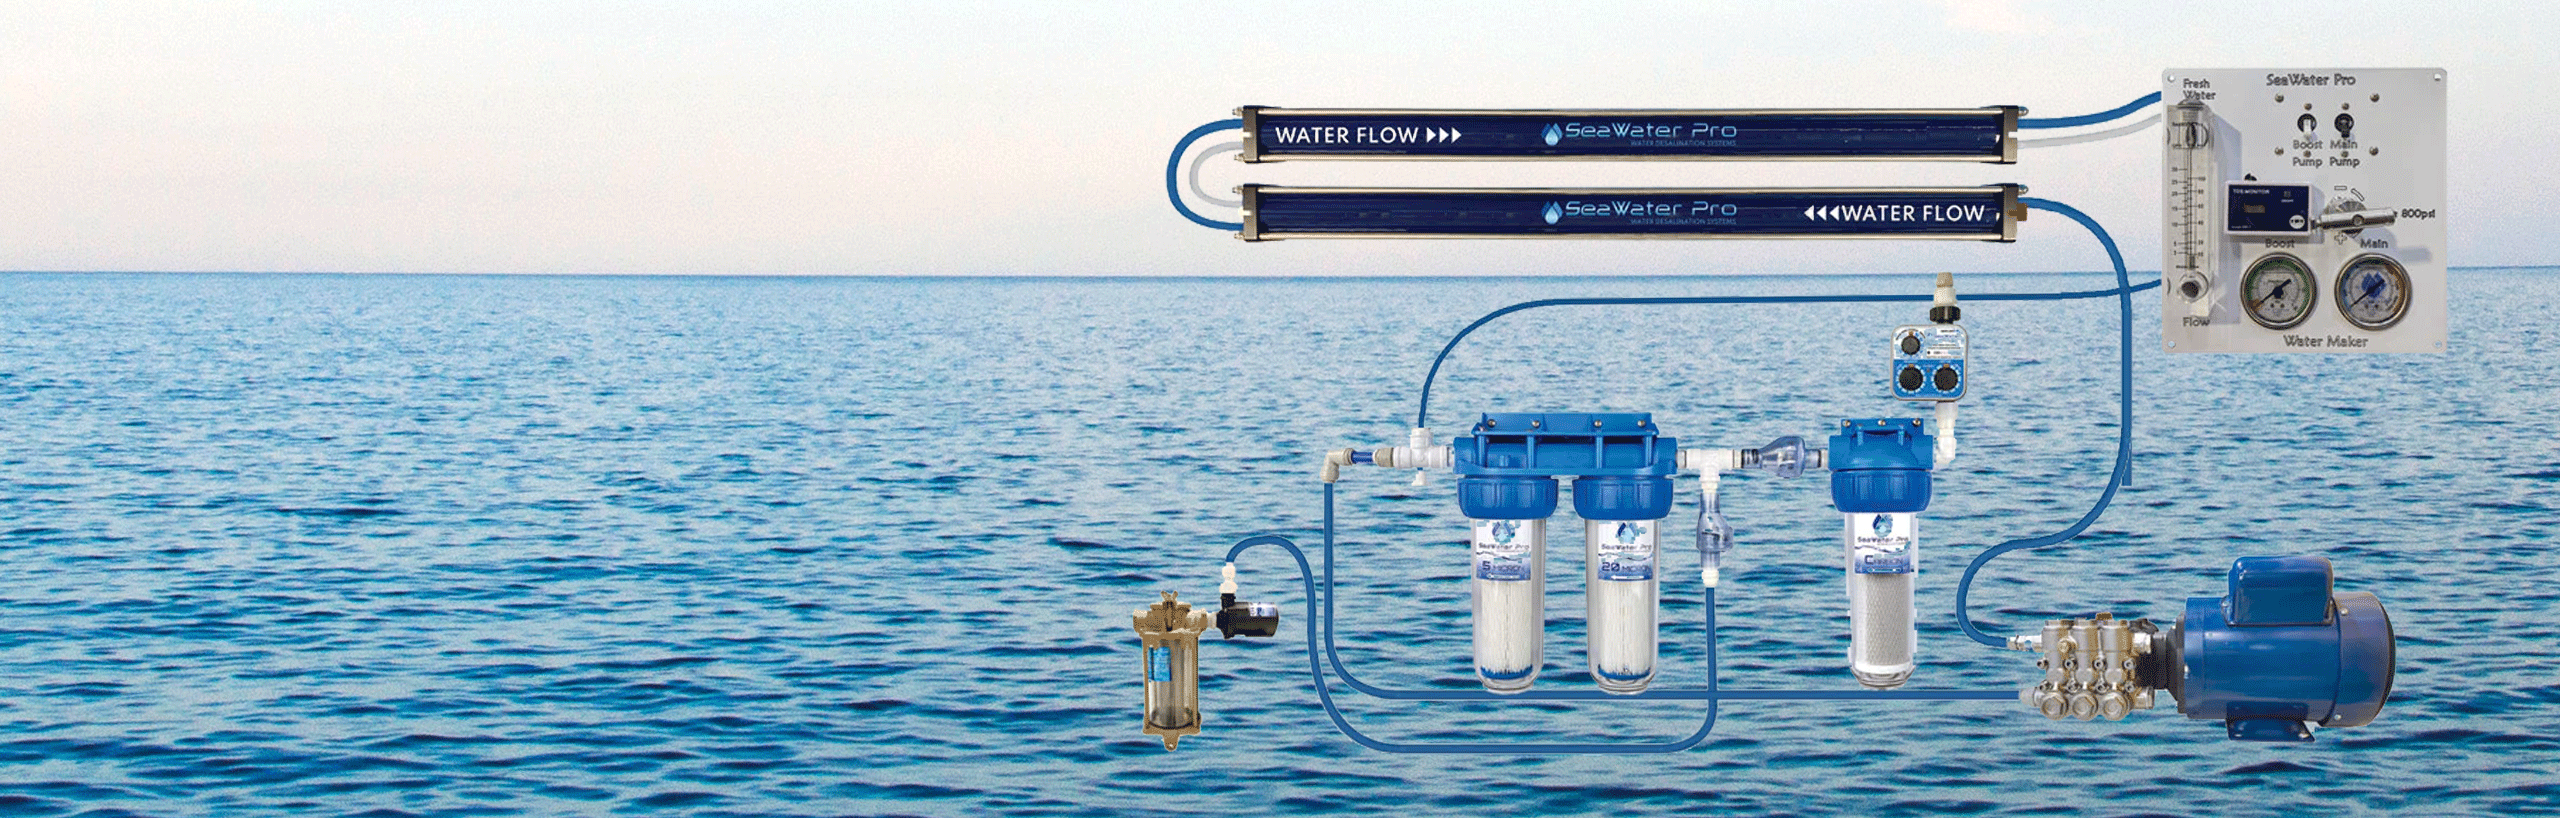 Seawater-pro watermaker